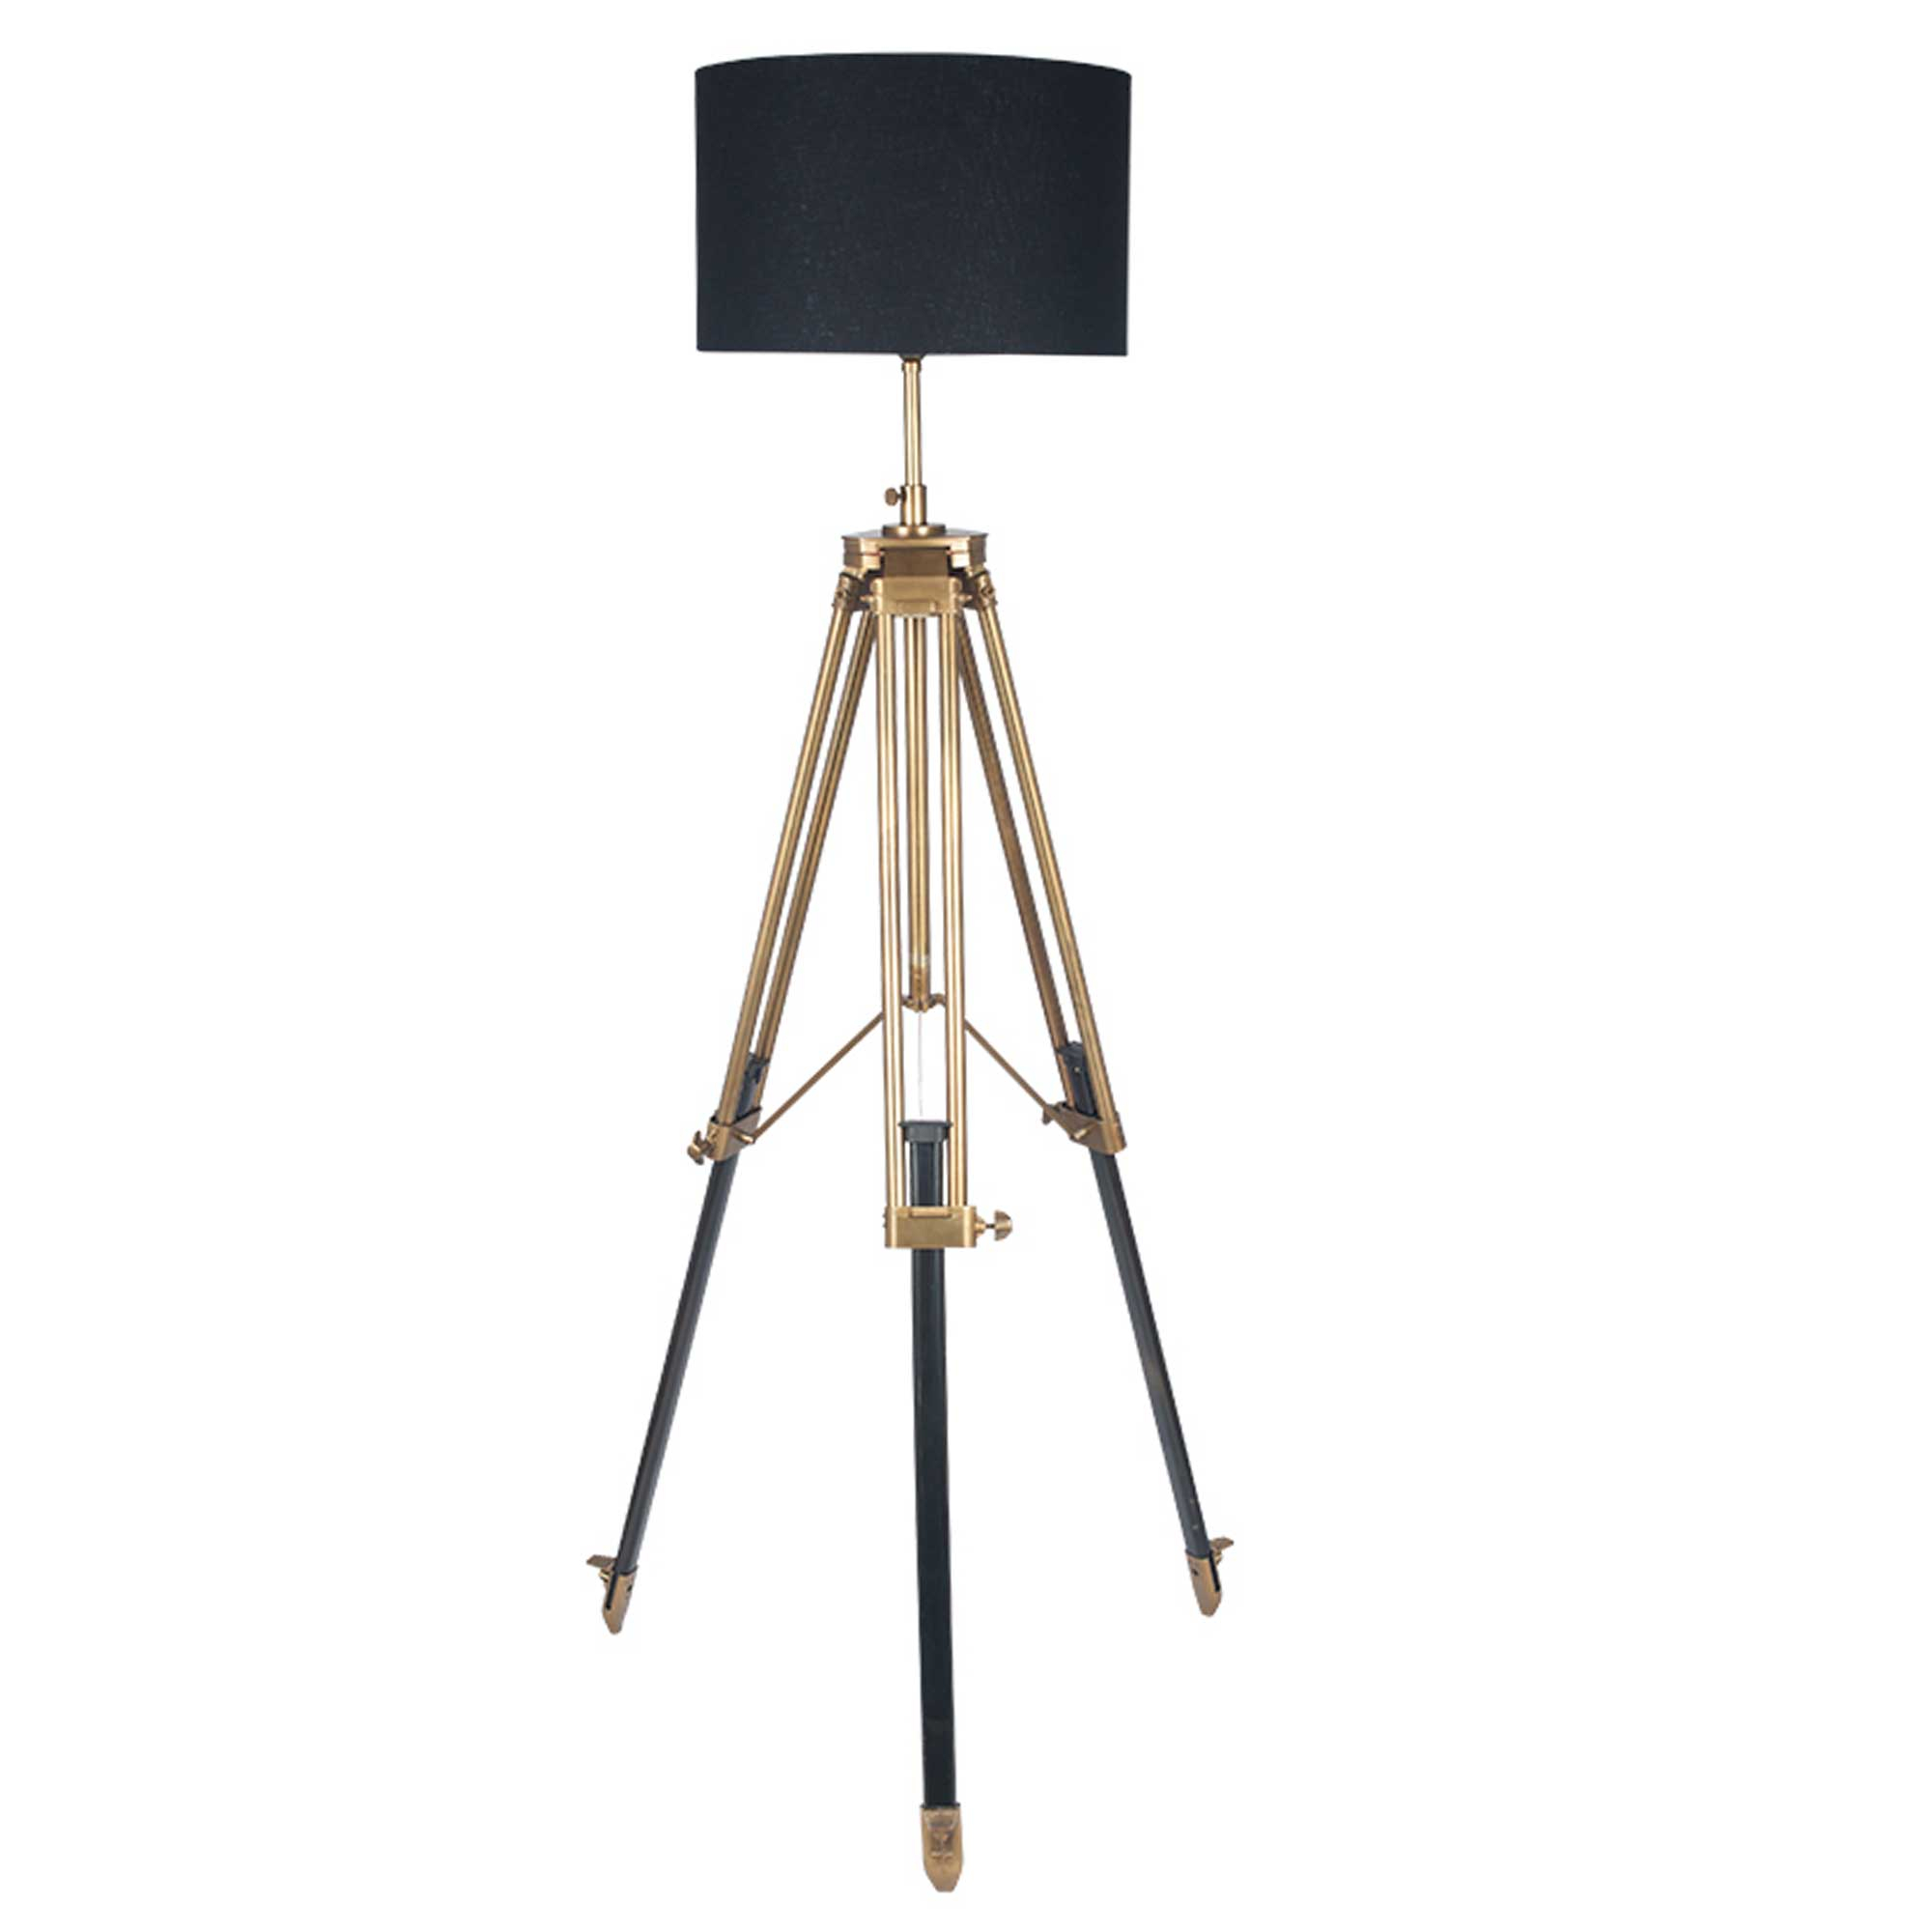 Antique Brass Tripod Floor Lamp Dark Wood Lighting Accessories for dimensions 2000 X 2000